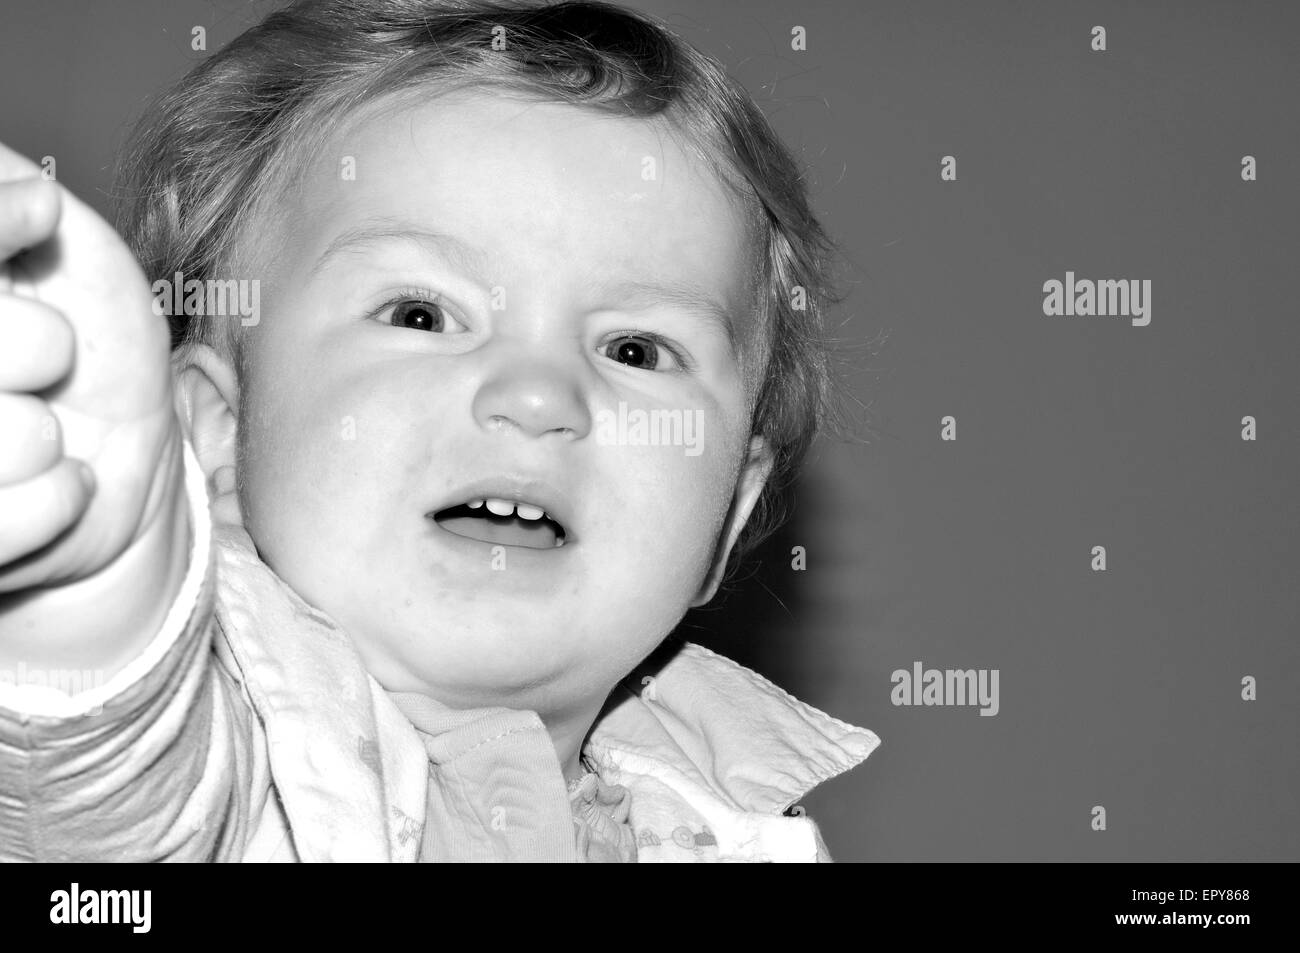 Portrait of a baby having a tantrum Stock Photo